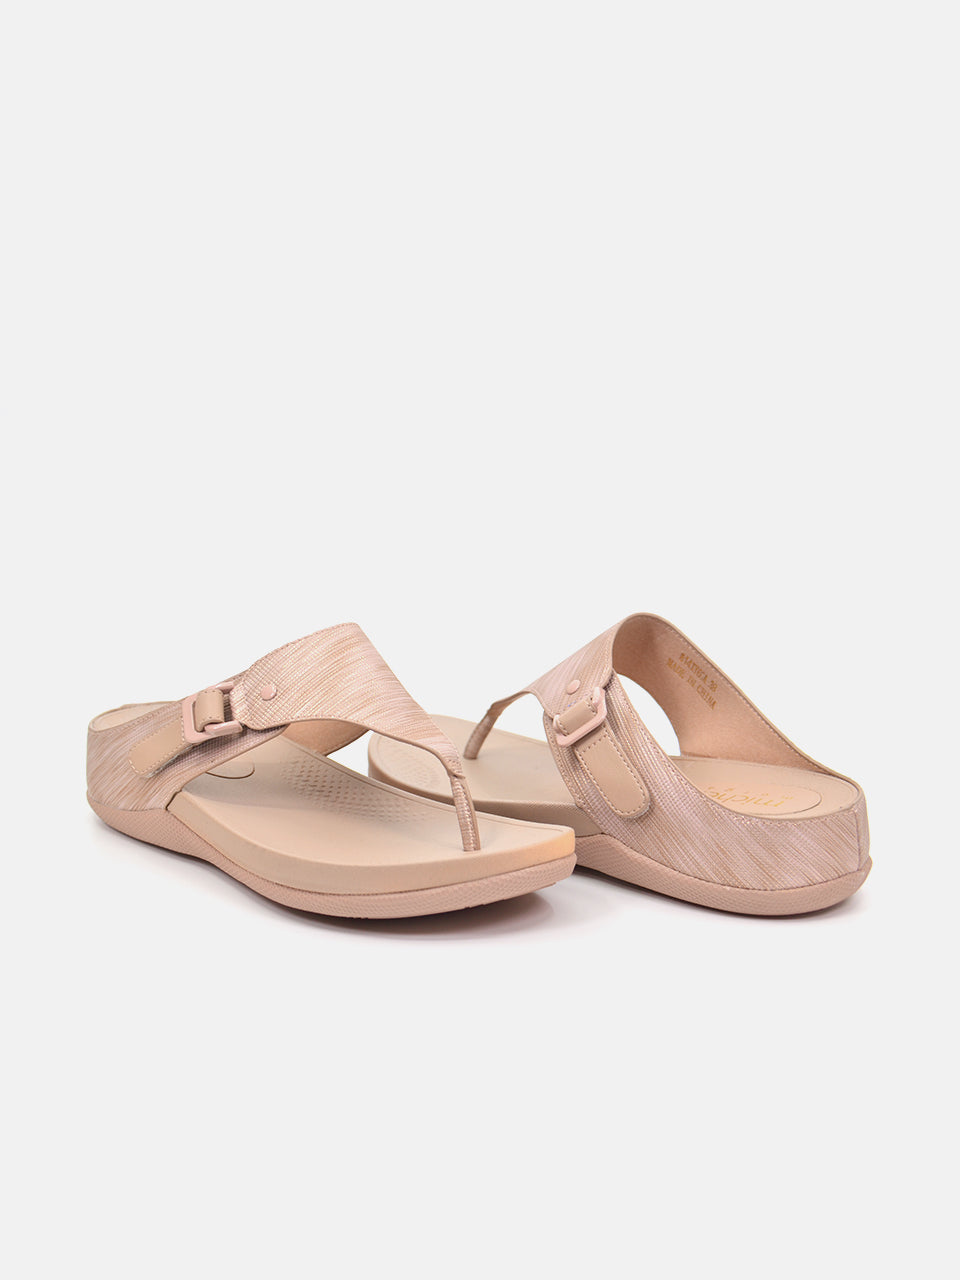 Michelle Morgan 814XY66A Women's Flat Sandals #color_Pink